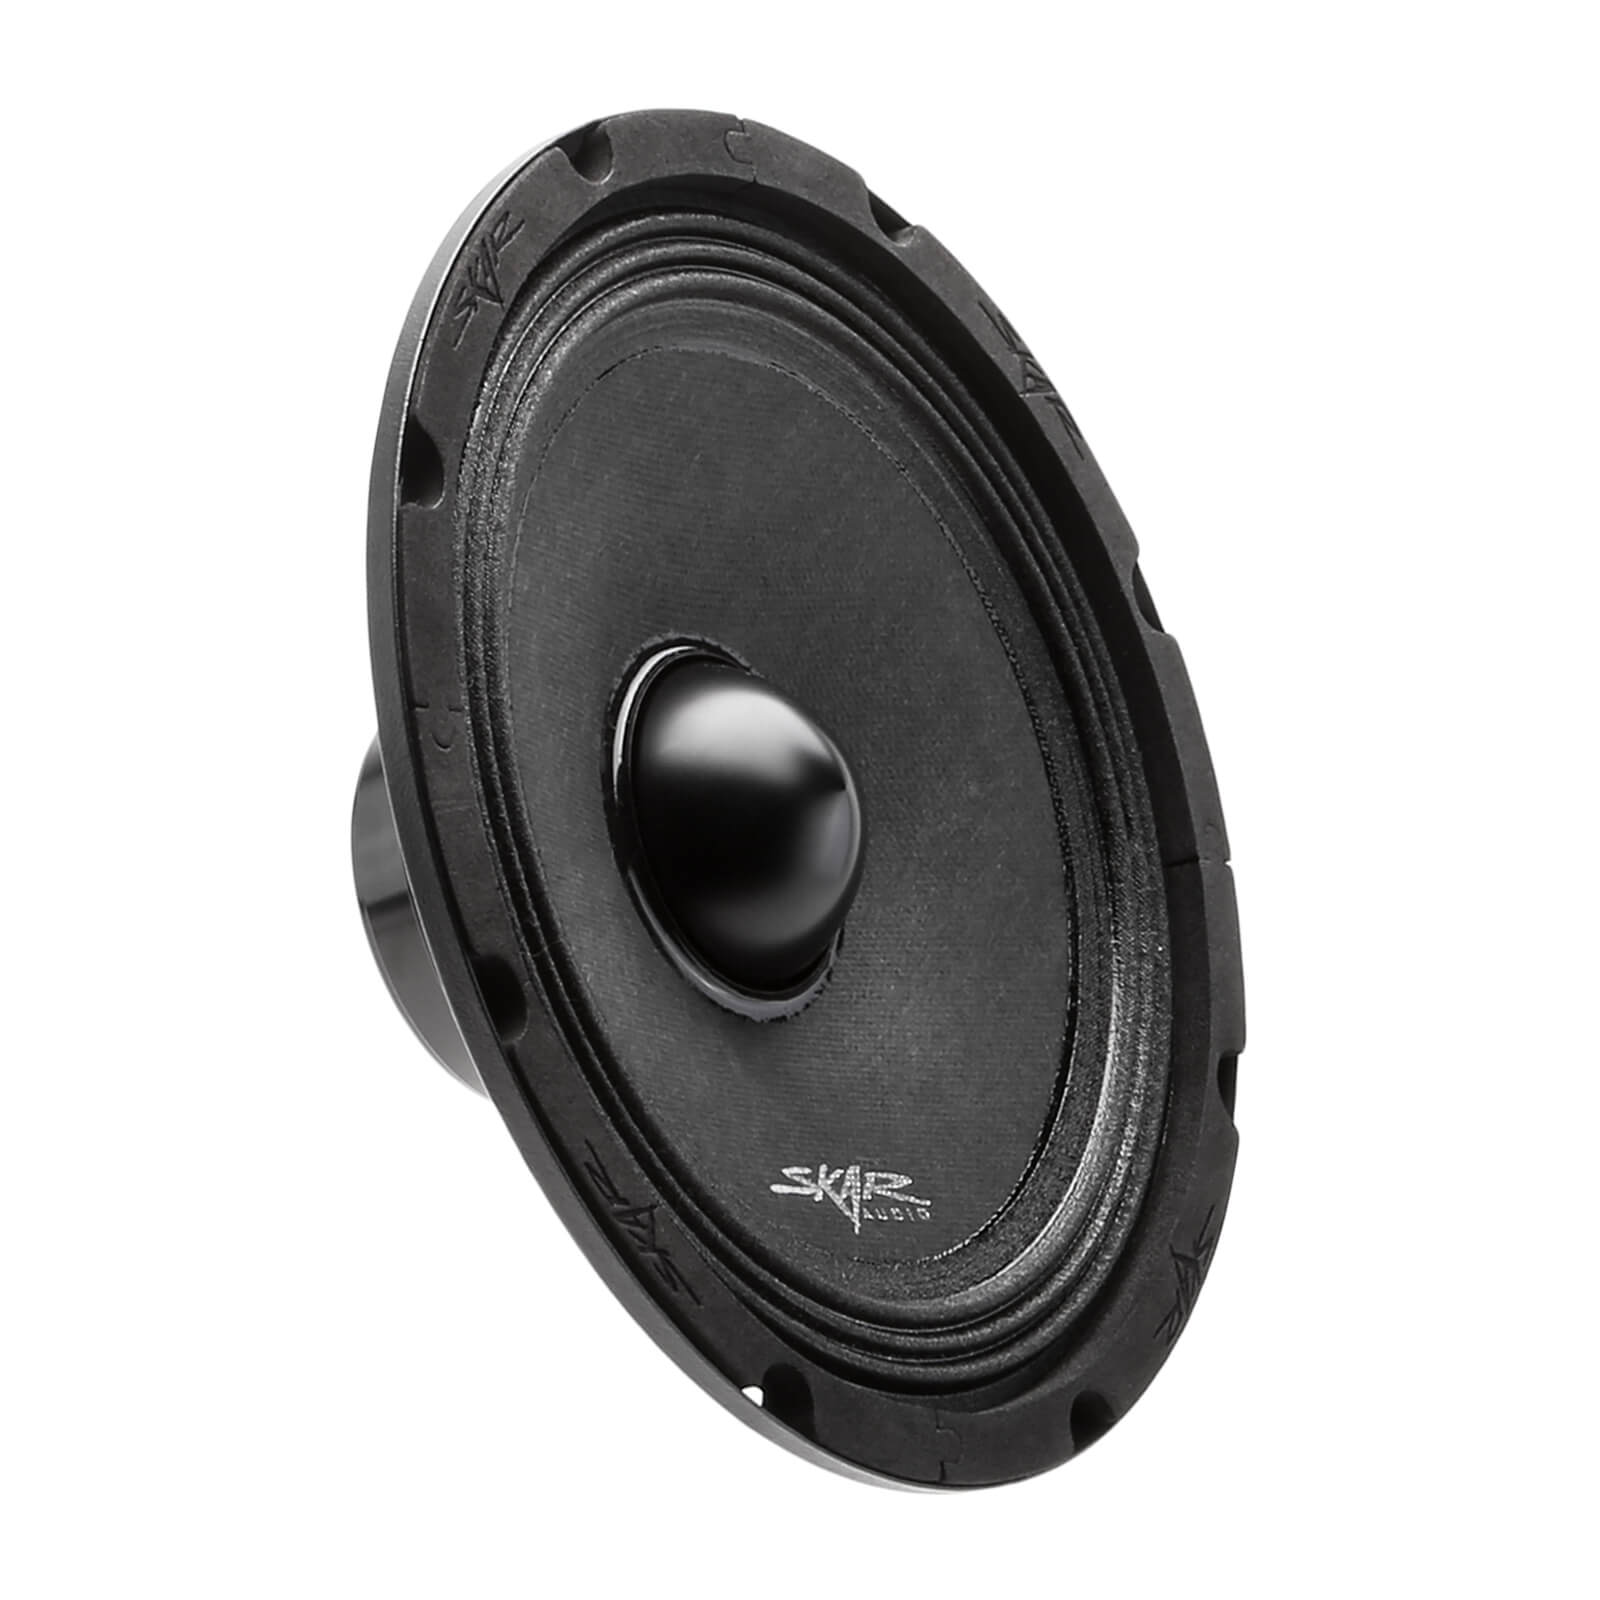 speaker 8 inch mid high